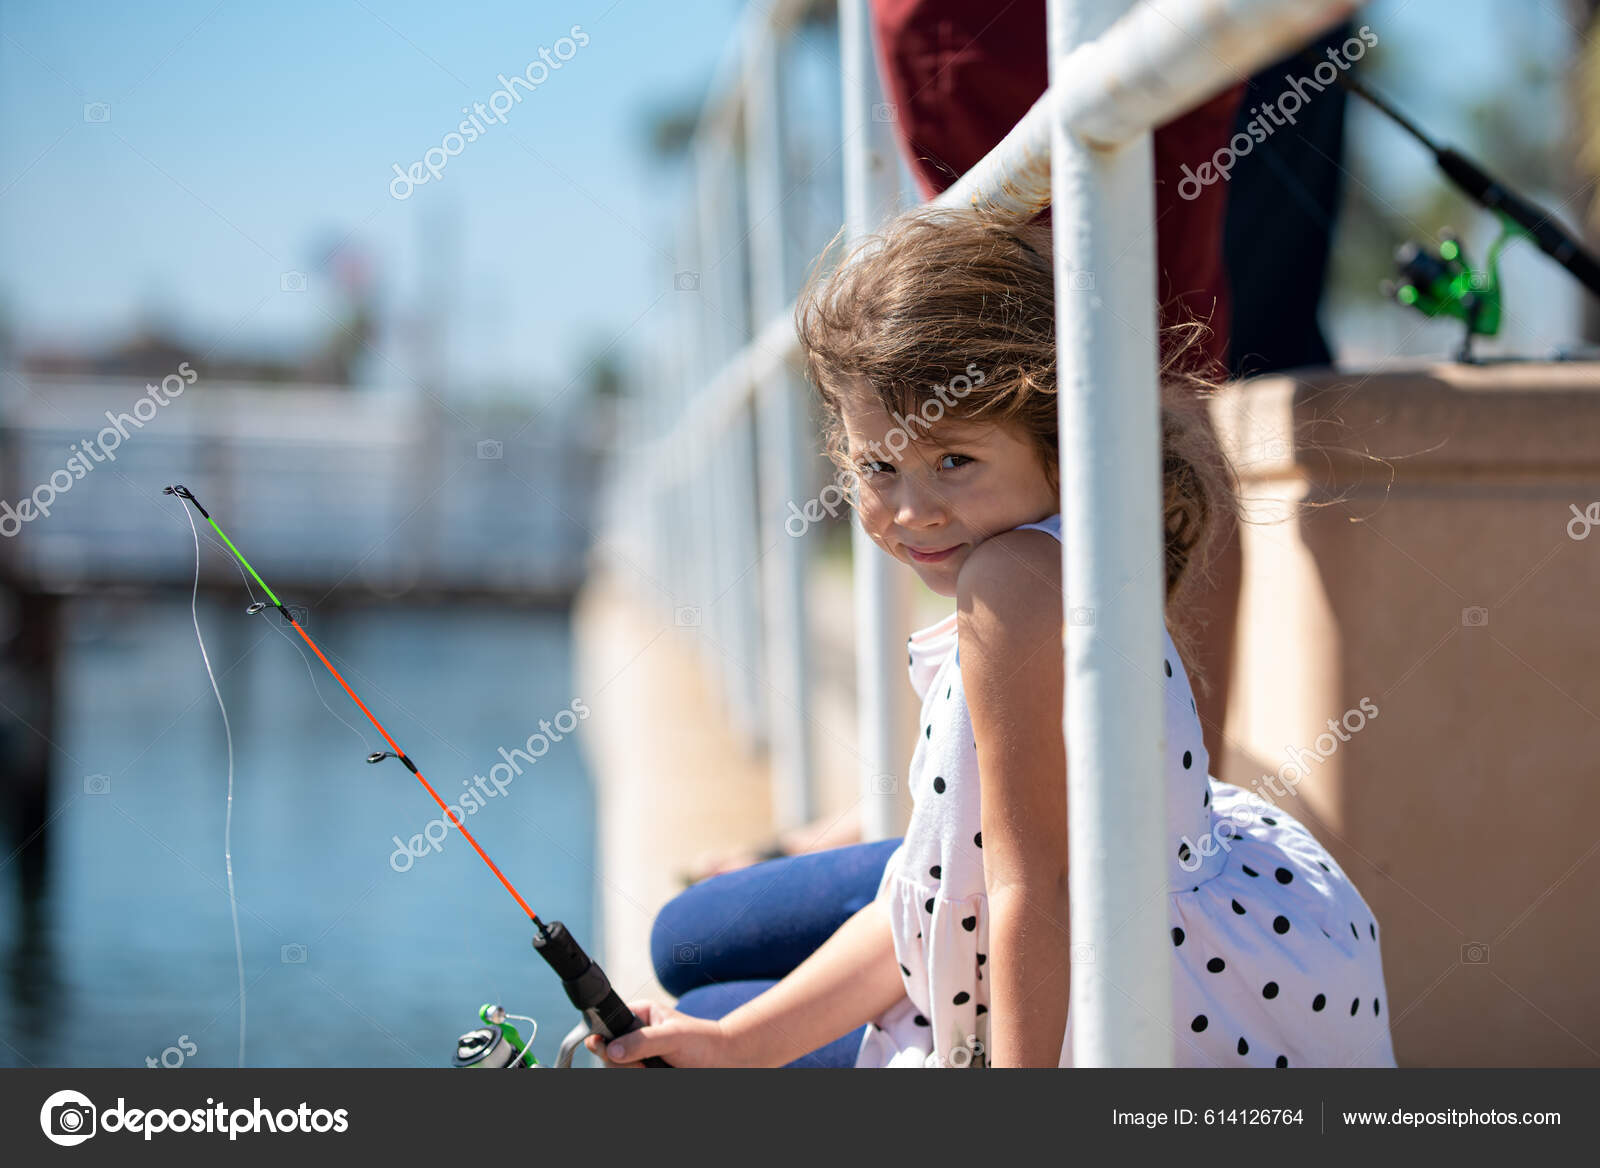 https://st.depositphotos.com/3584053/61412/i/1600/depositphotos_614126764-stock-photo-child-girl-fishing-catches-fish.jpg